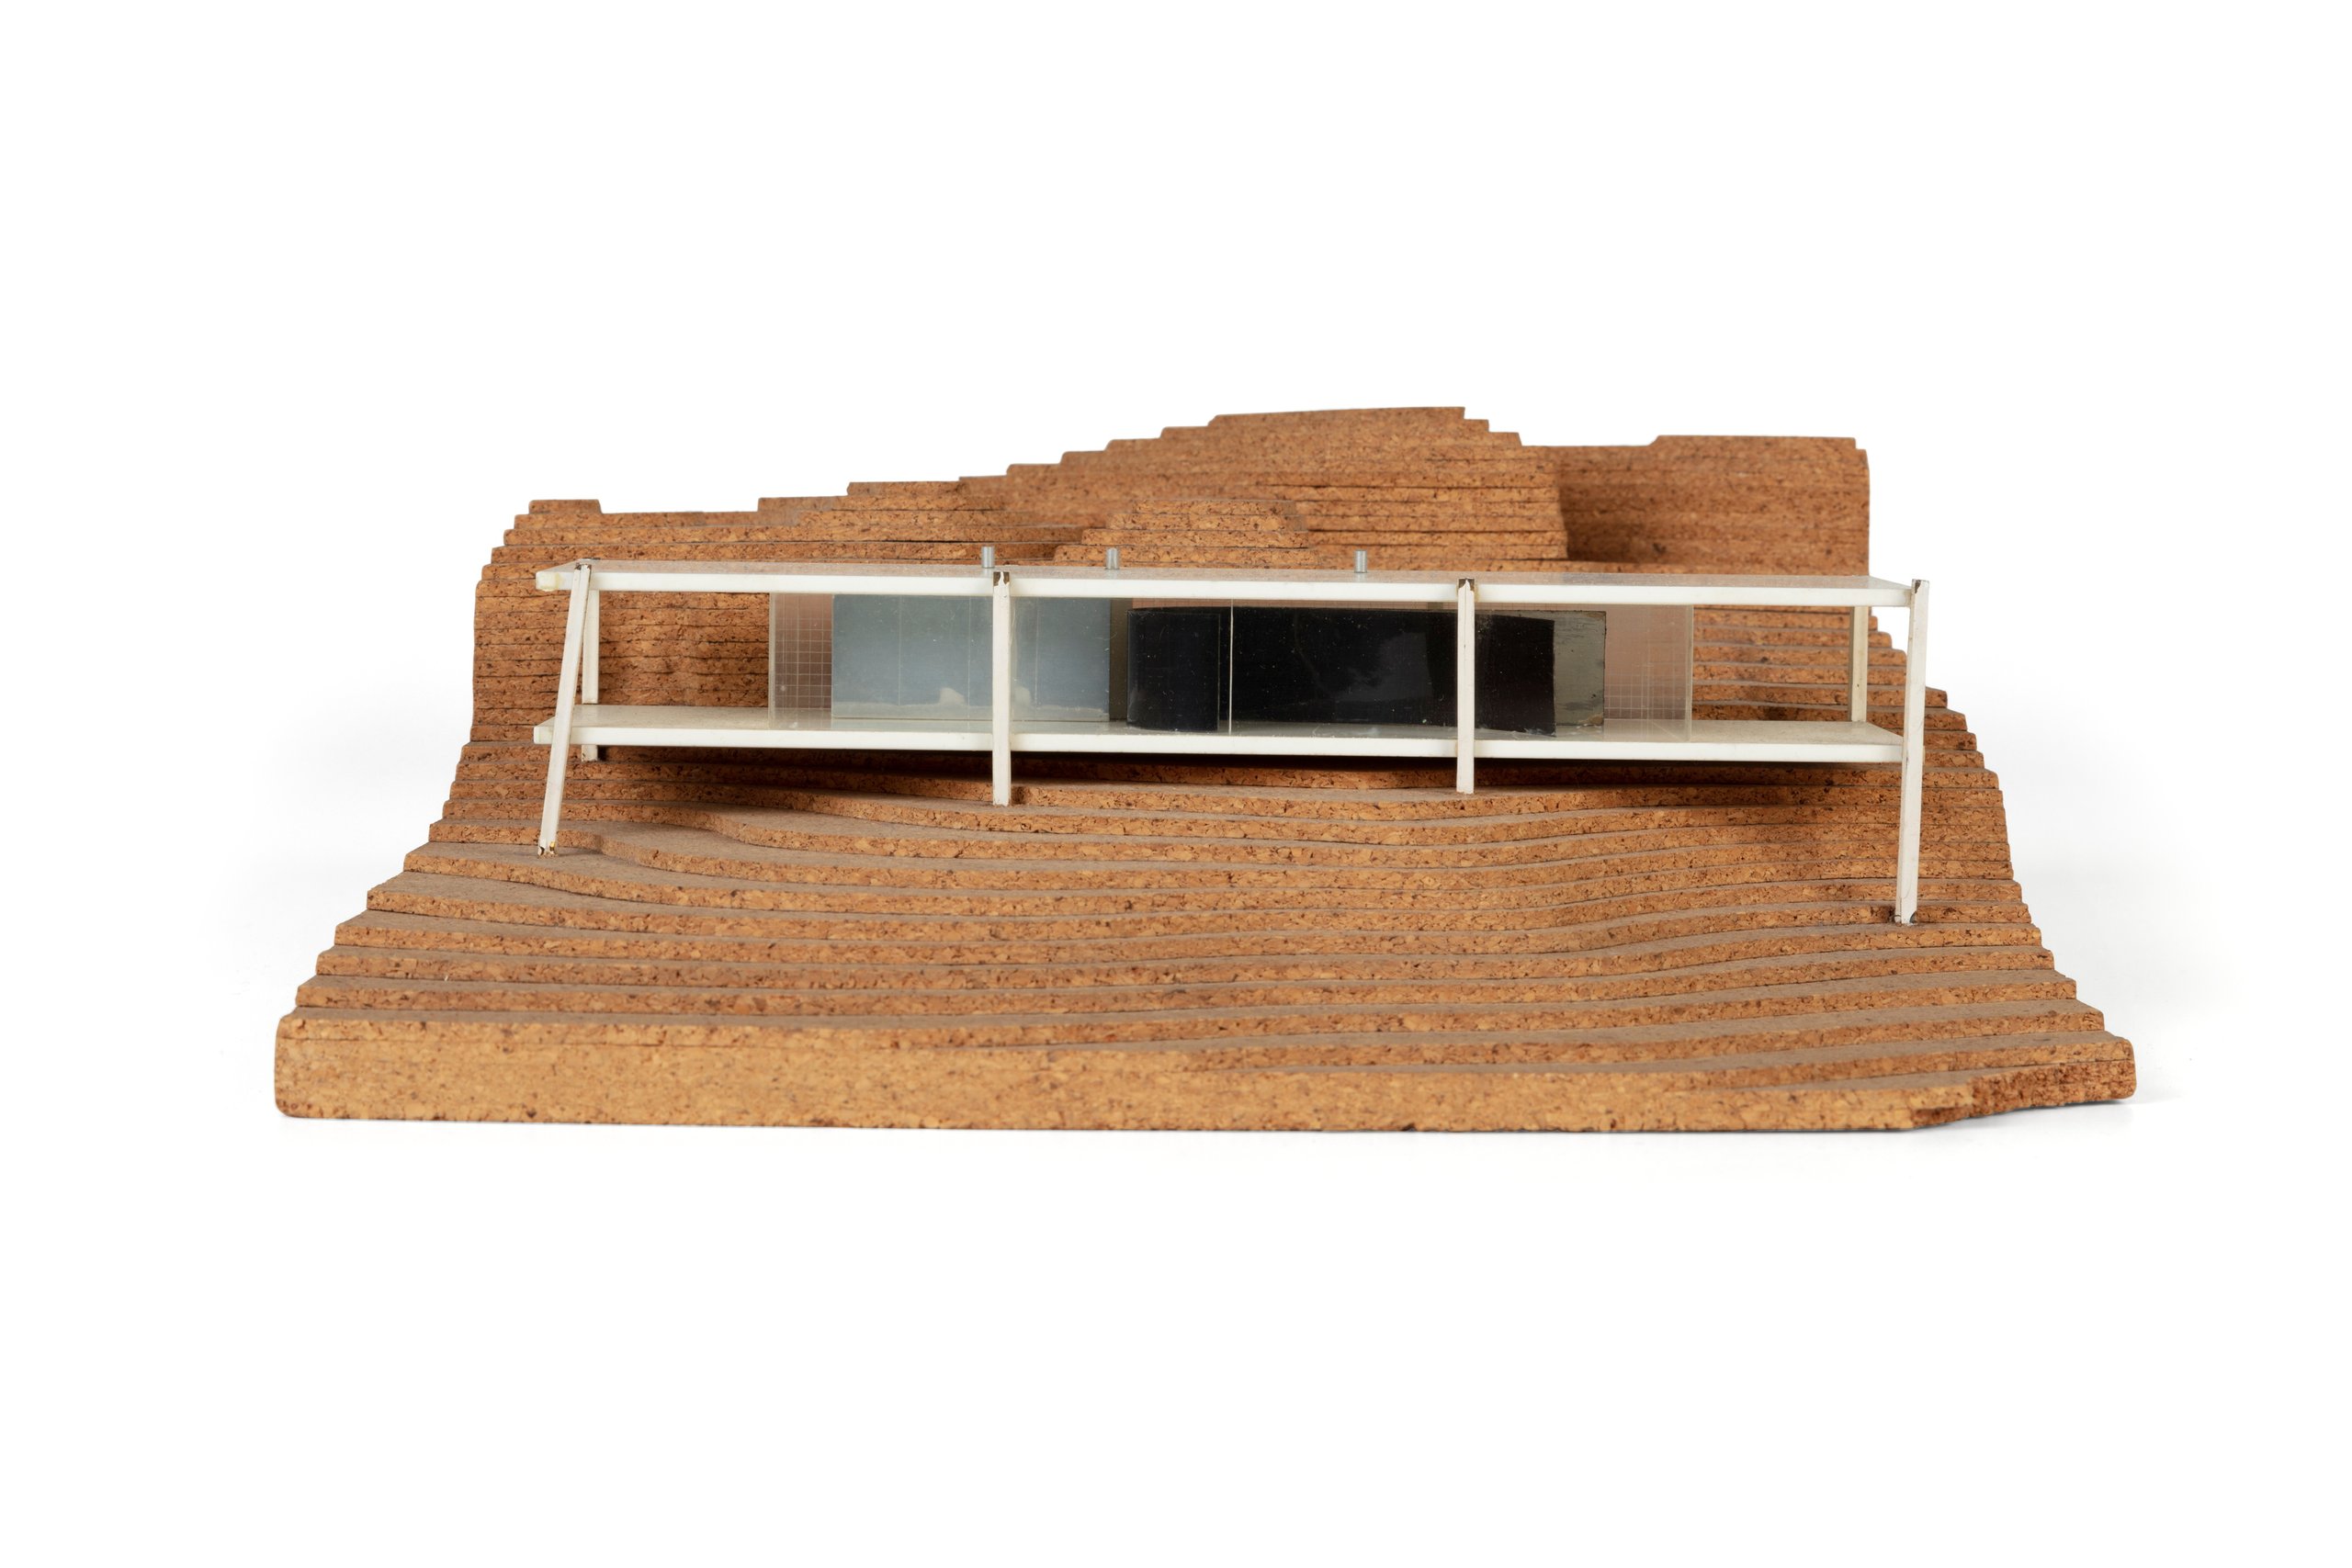 Architectural model of Daphne Murcutt House by Glenn Murcutt